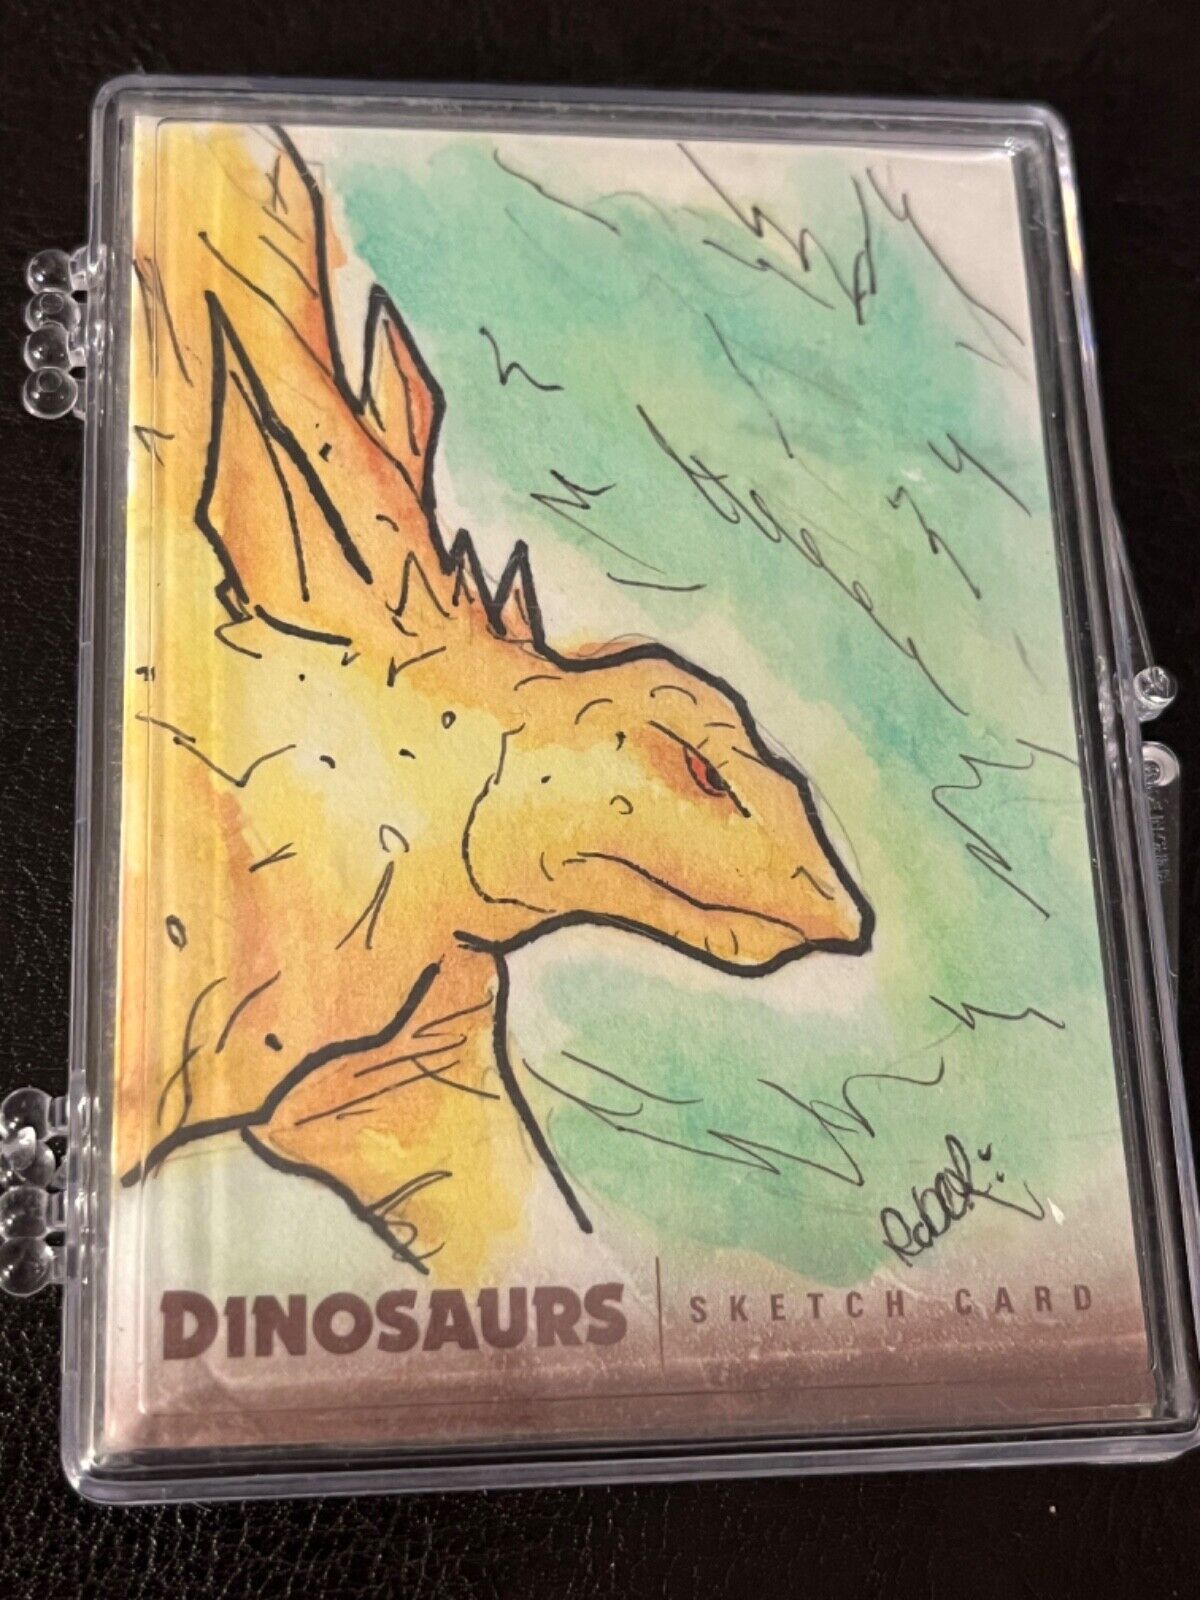 🔥2014 Upper Deck Dinosaurs Sketch Card 1 of 1.